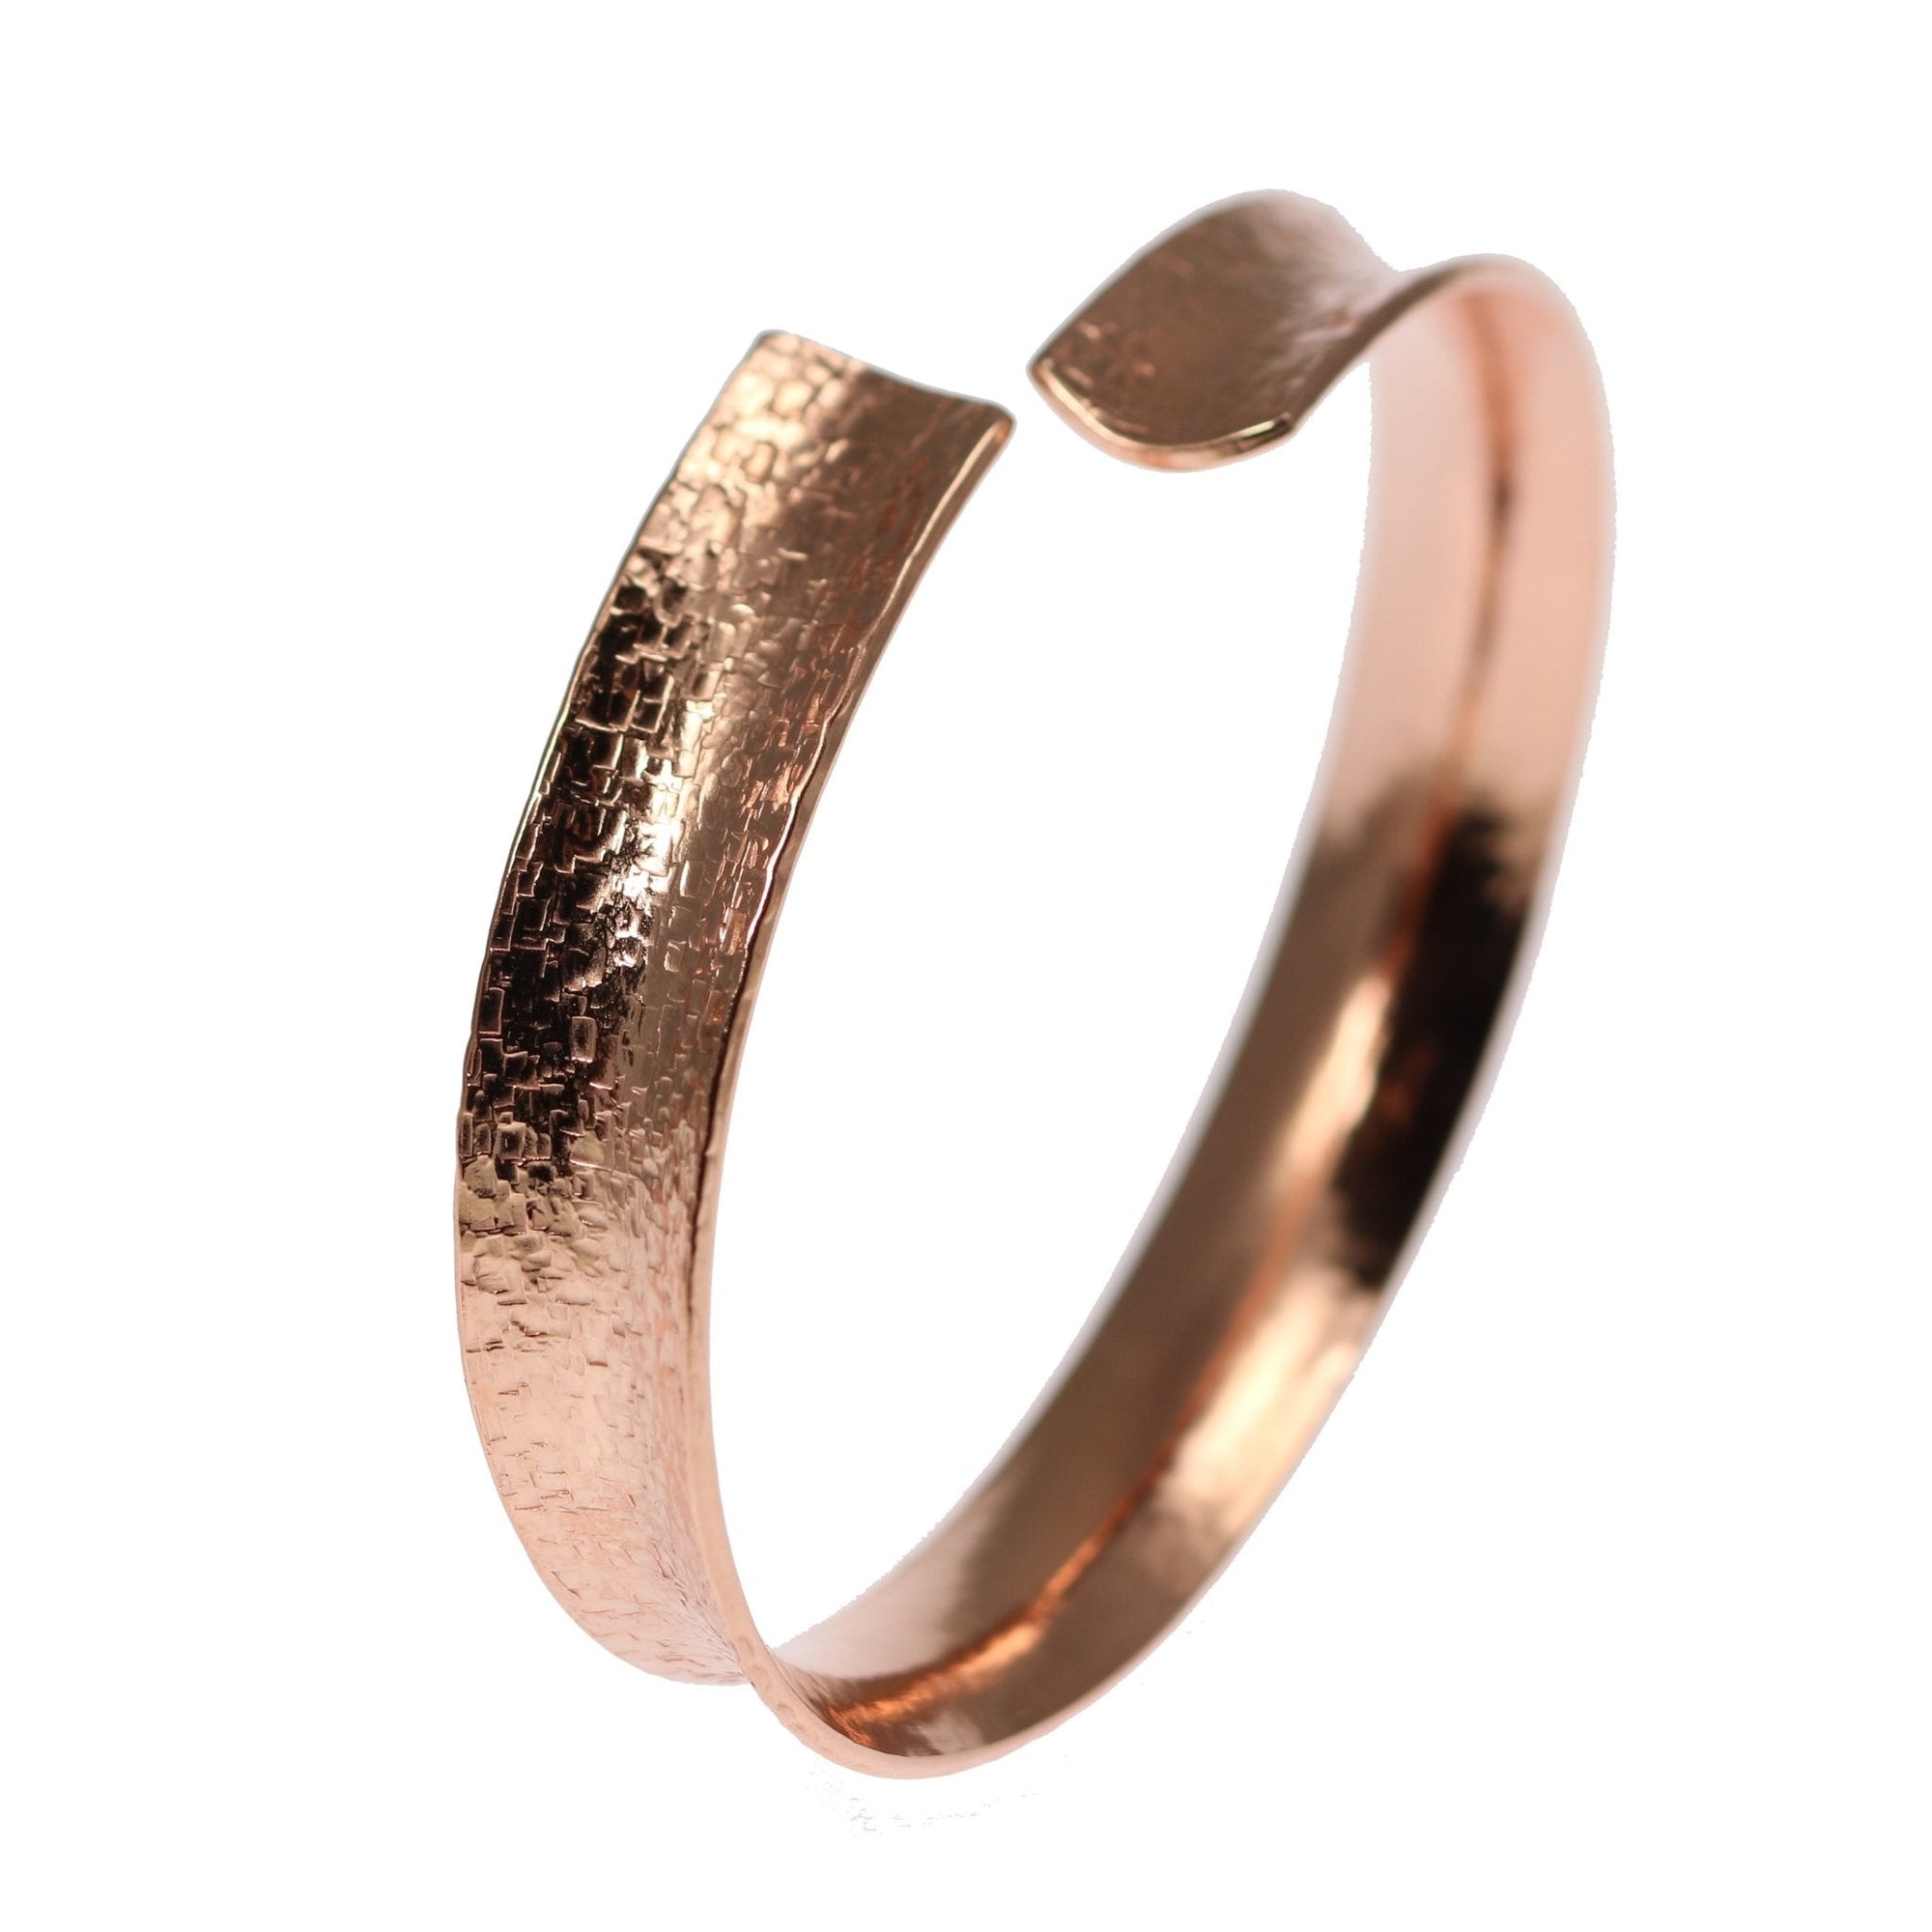 Anticlastic Texturized Copper Bangle Bracelet